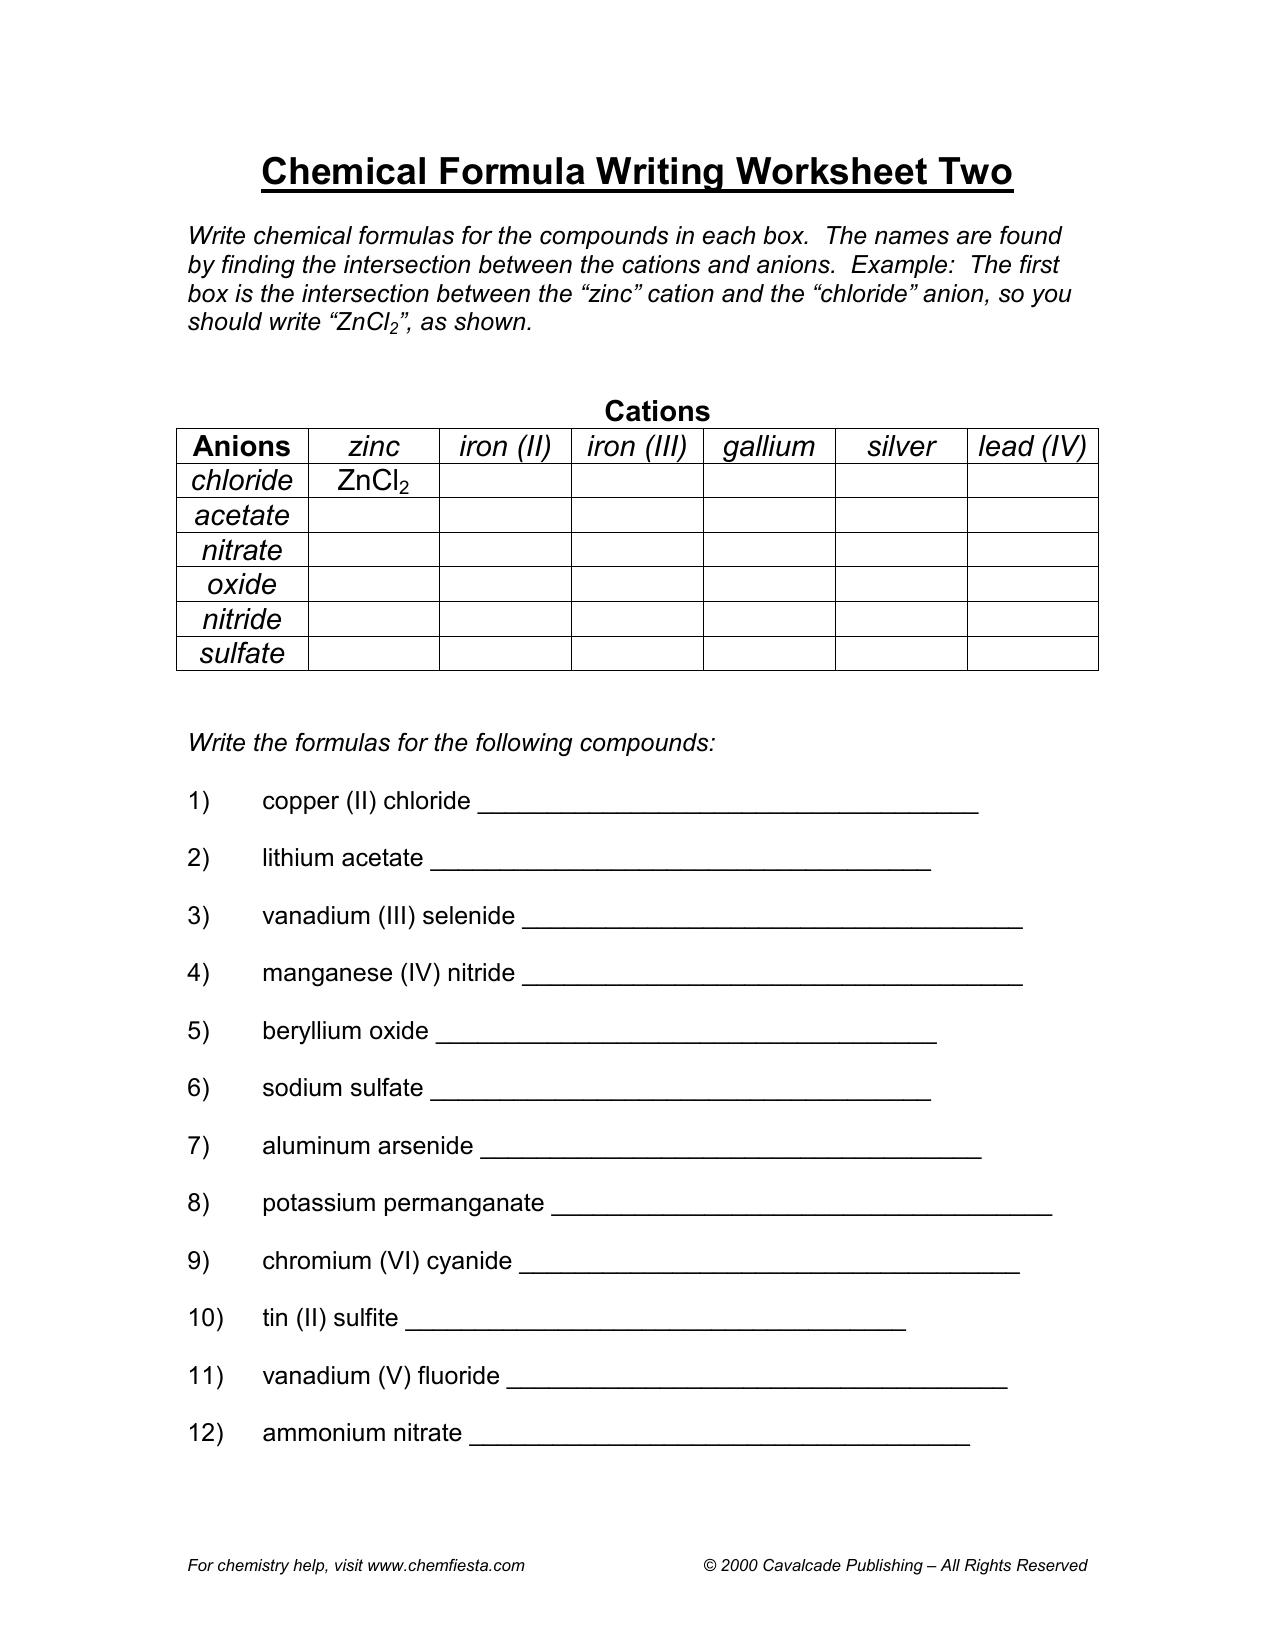 Chemical Formula Writing Worksheet II-revised 11-11 In Chemical Formula Writing Worksheet